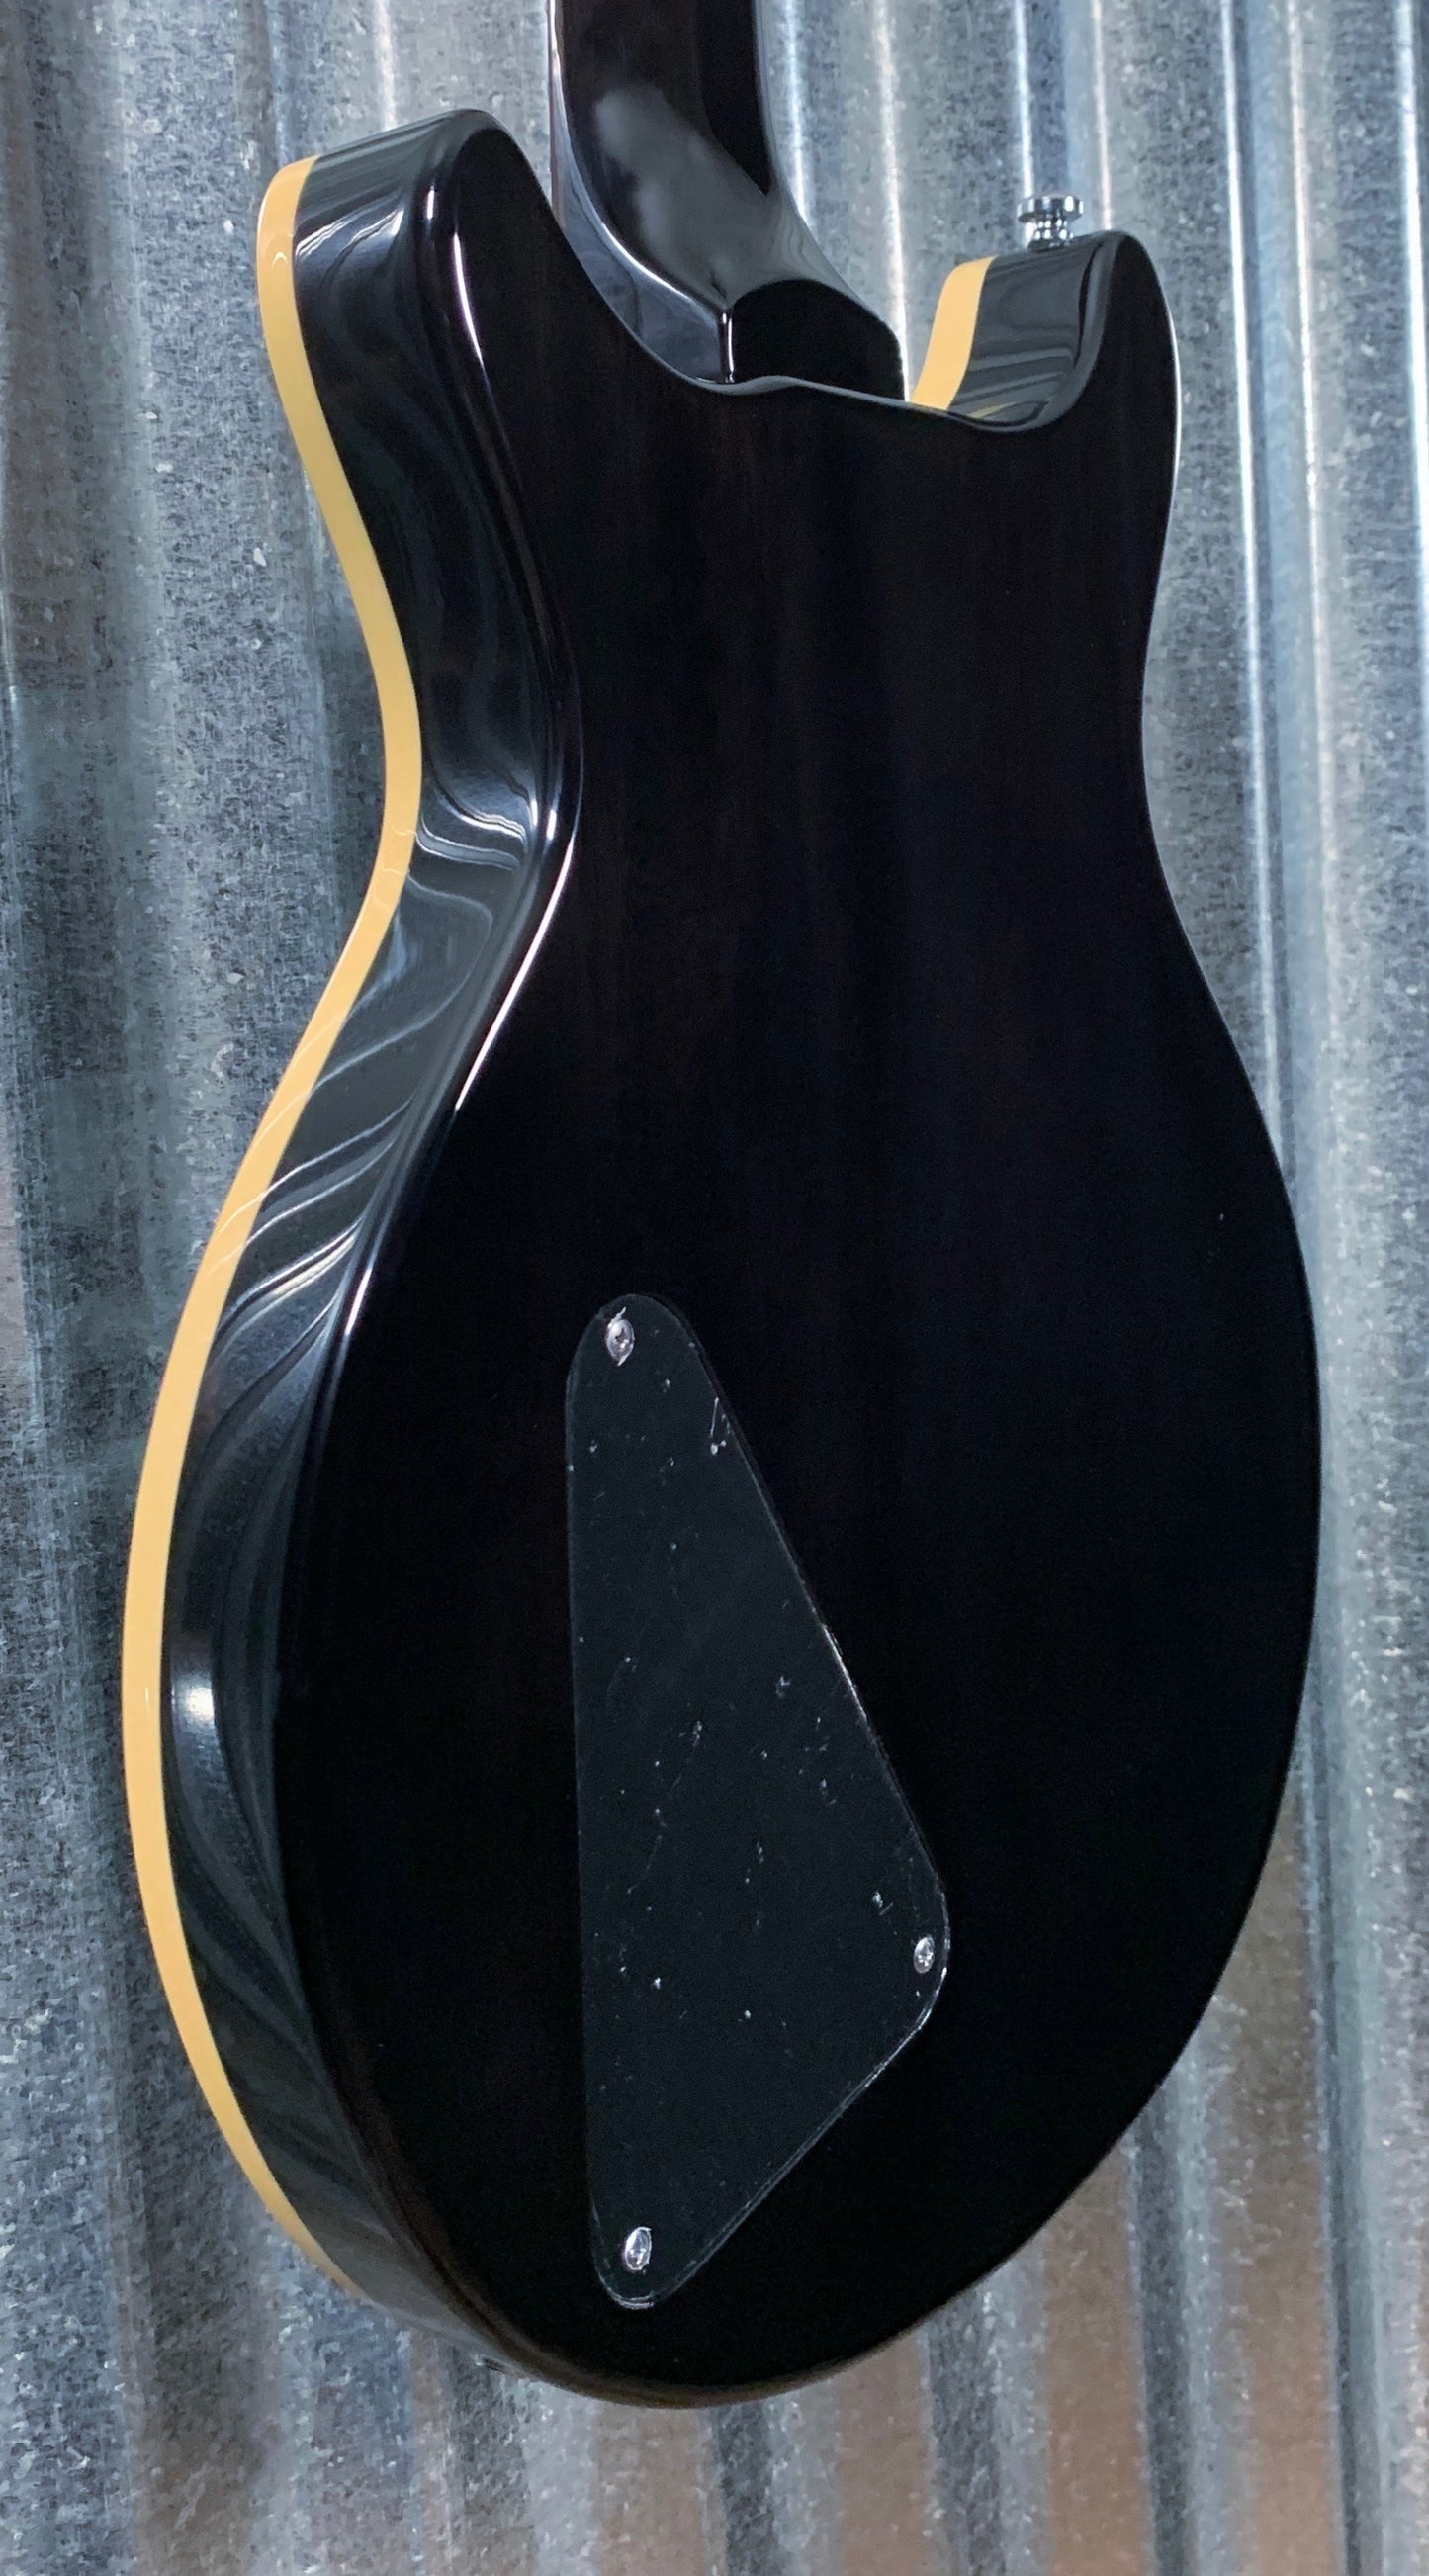 Hamer Archtop Flame Trans Black Double Cut Electric Guitar SATF-TBK #0654